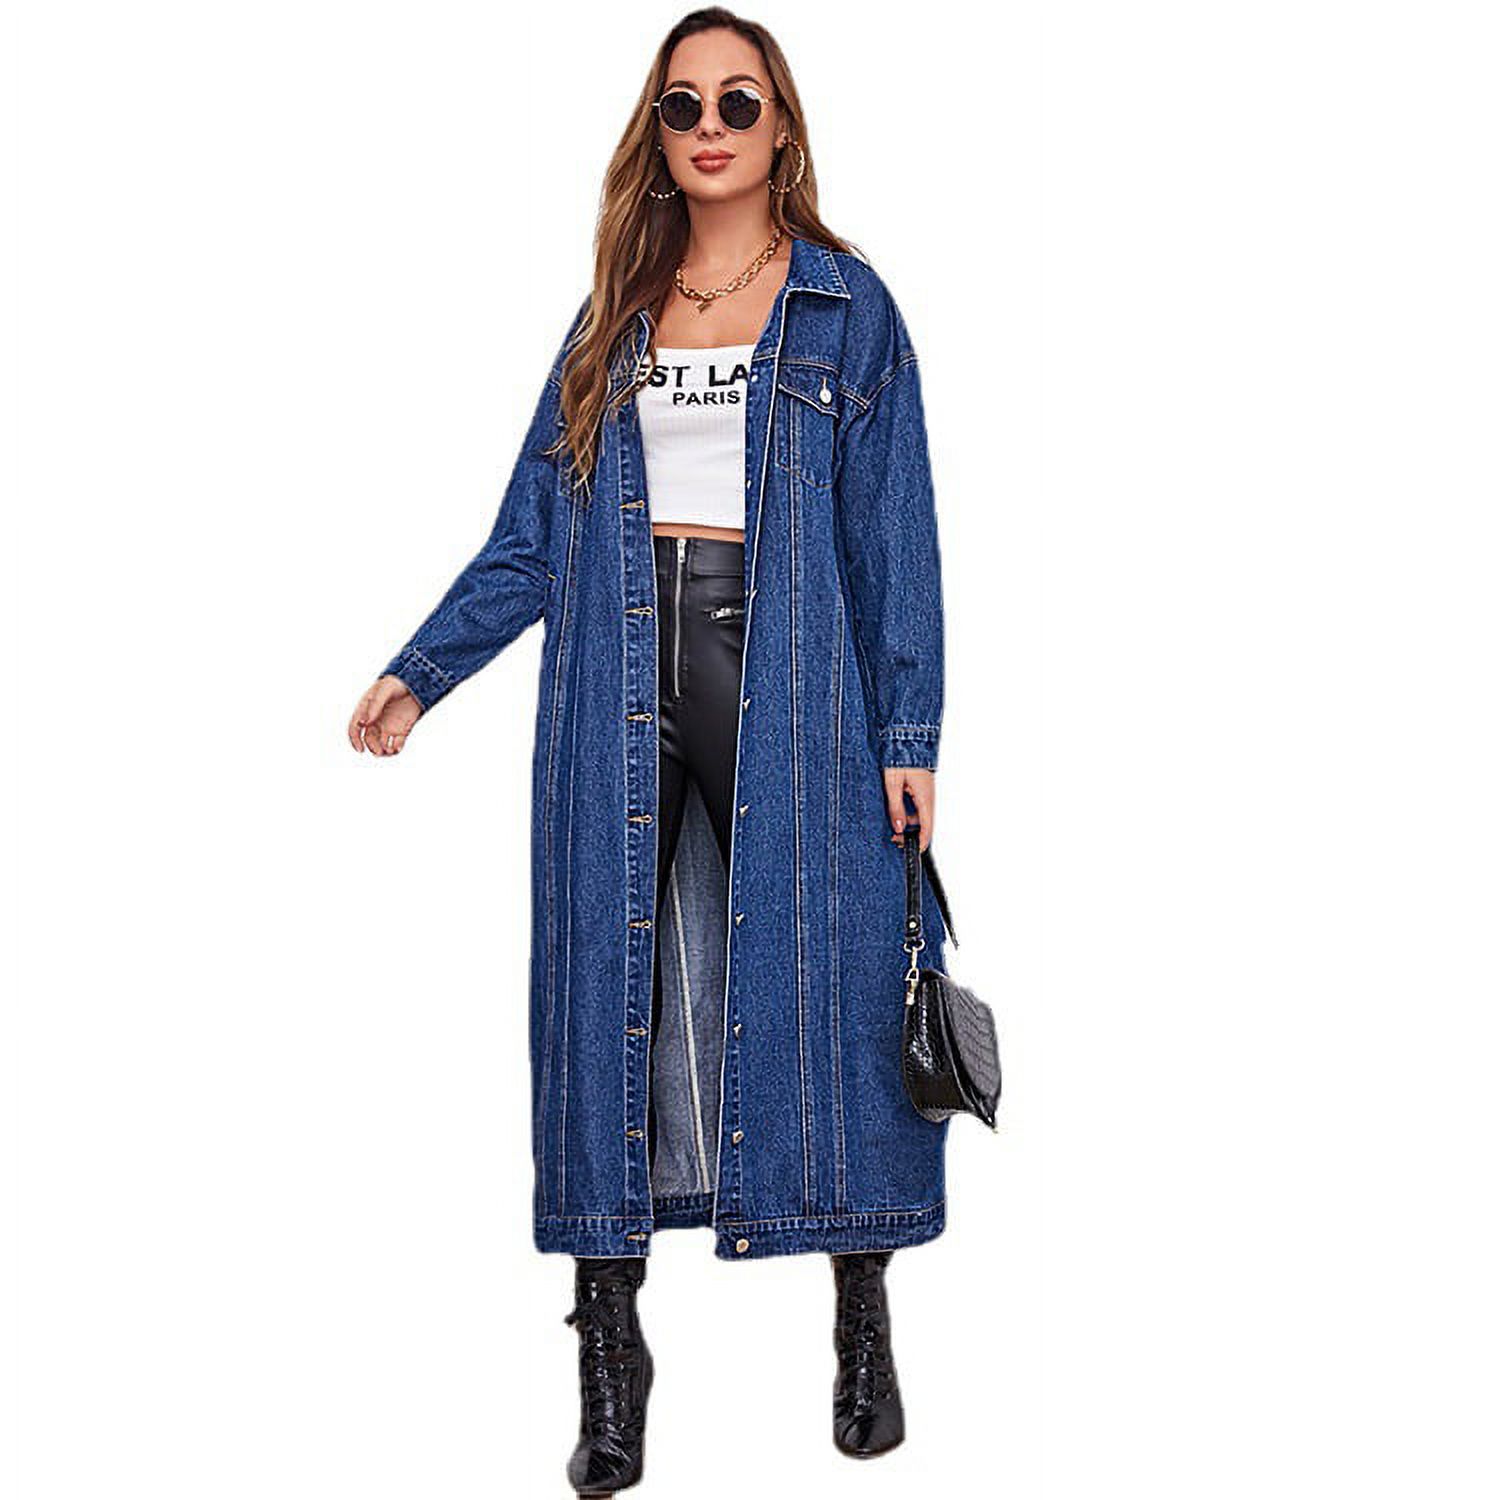 Tianlu Women's Fashion Spring Button Down Midi Long Denim Jean Jacket Trench Coat Blue, size L - image 1 of 5